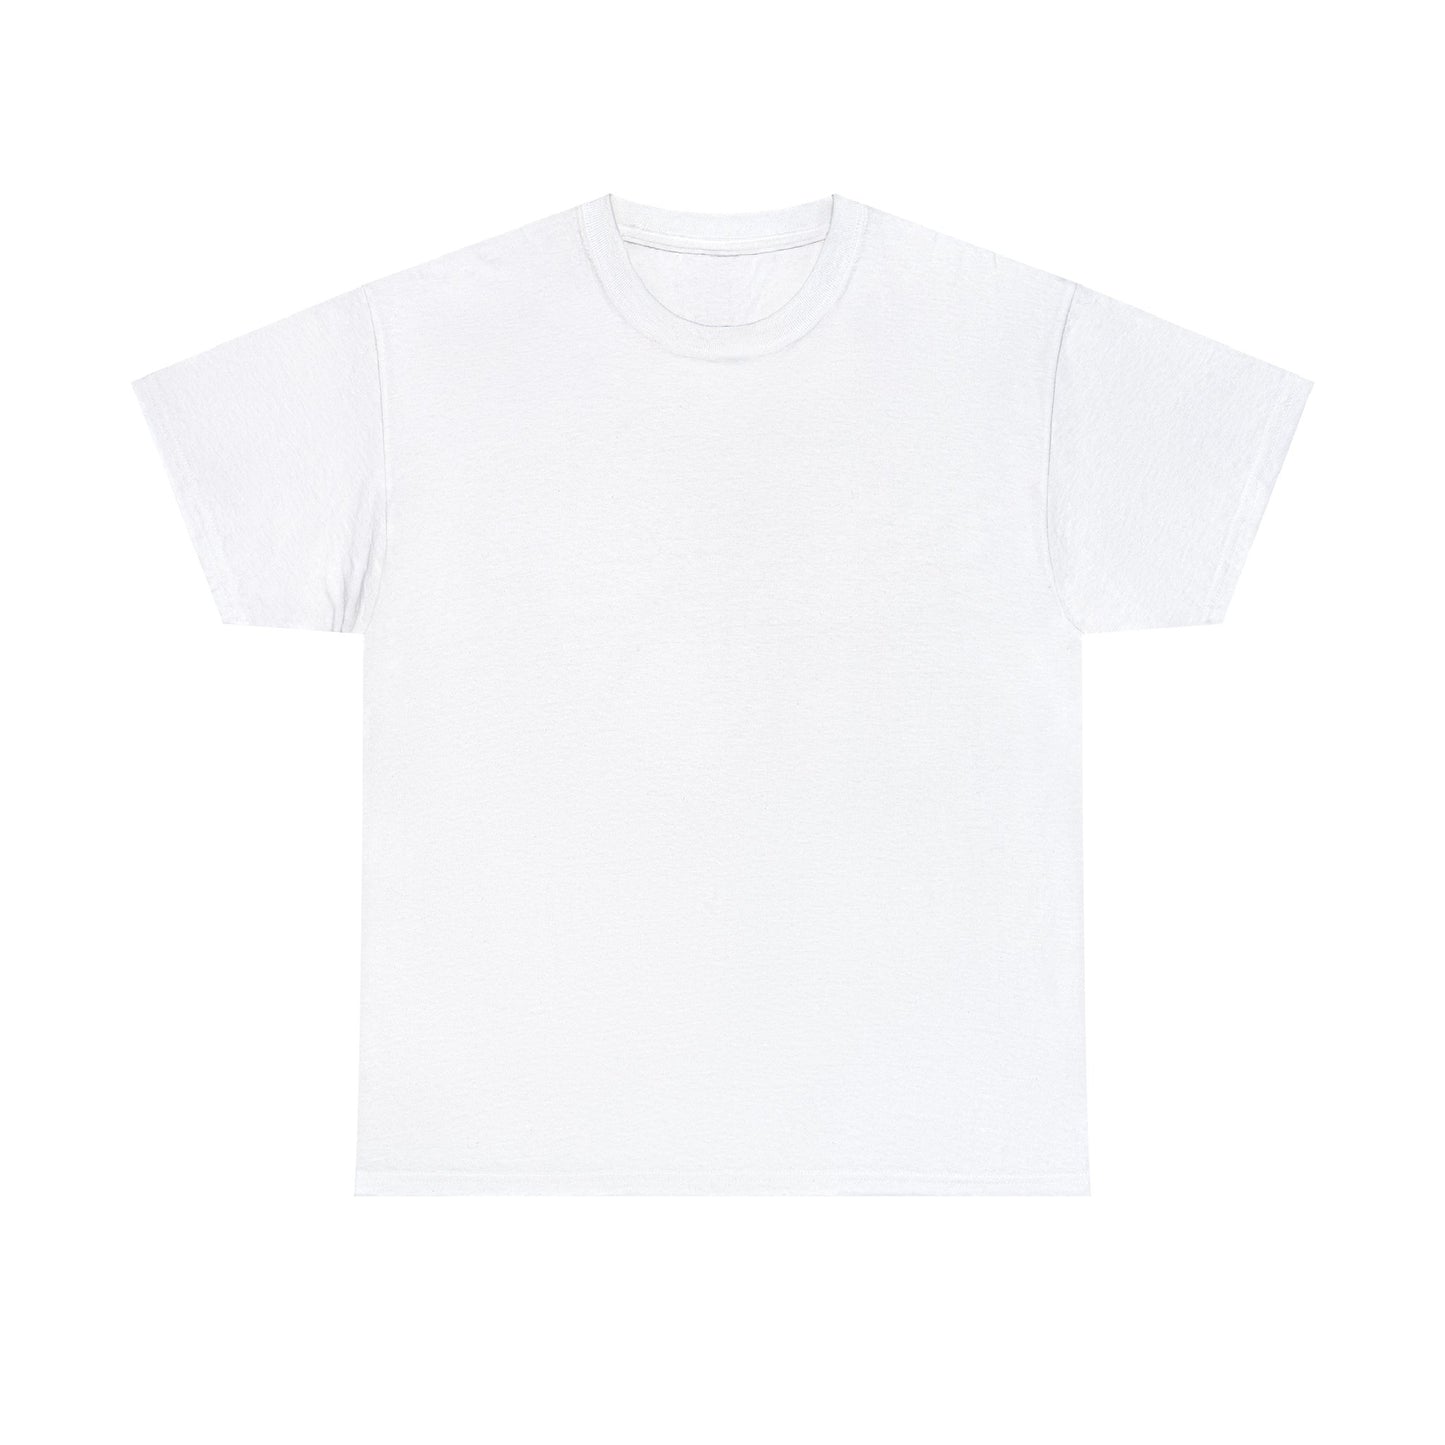 Men's B.A.S.I.C "Small Sized Logo" White Font Tee Shirt